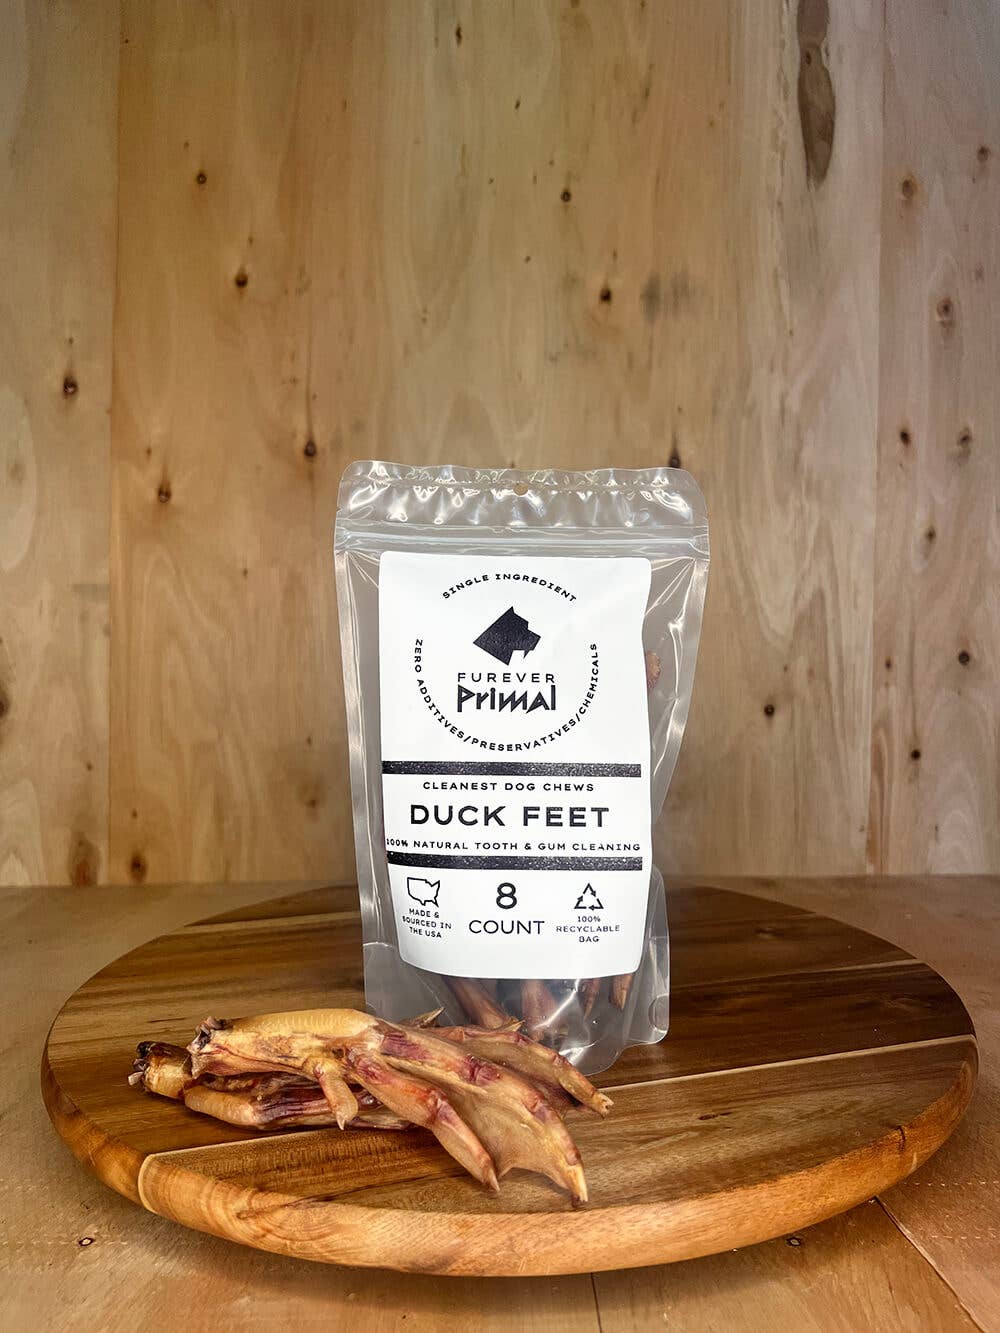 Furever Primal - Bagged Dog Chew: Duck Feet - Natural Single Ingredient: 4 pack